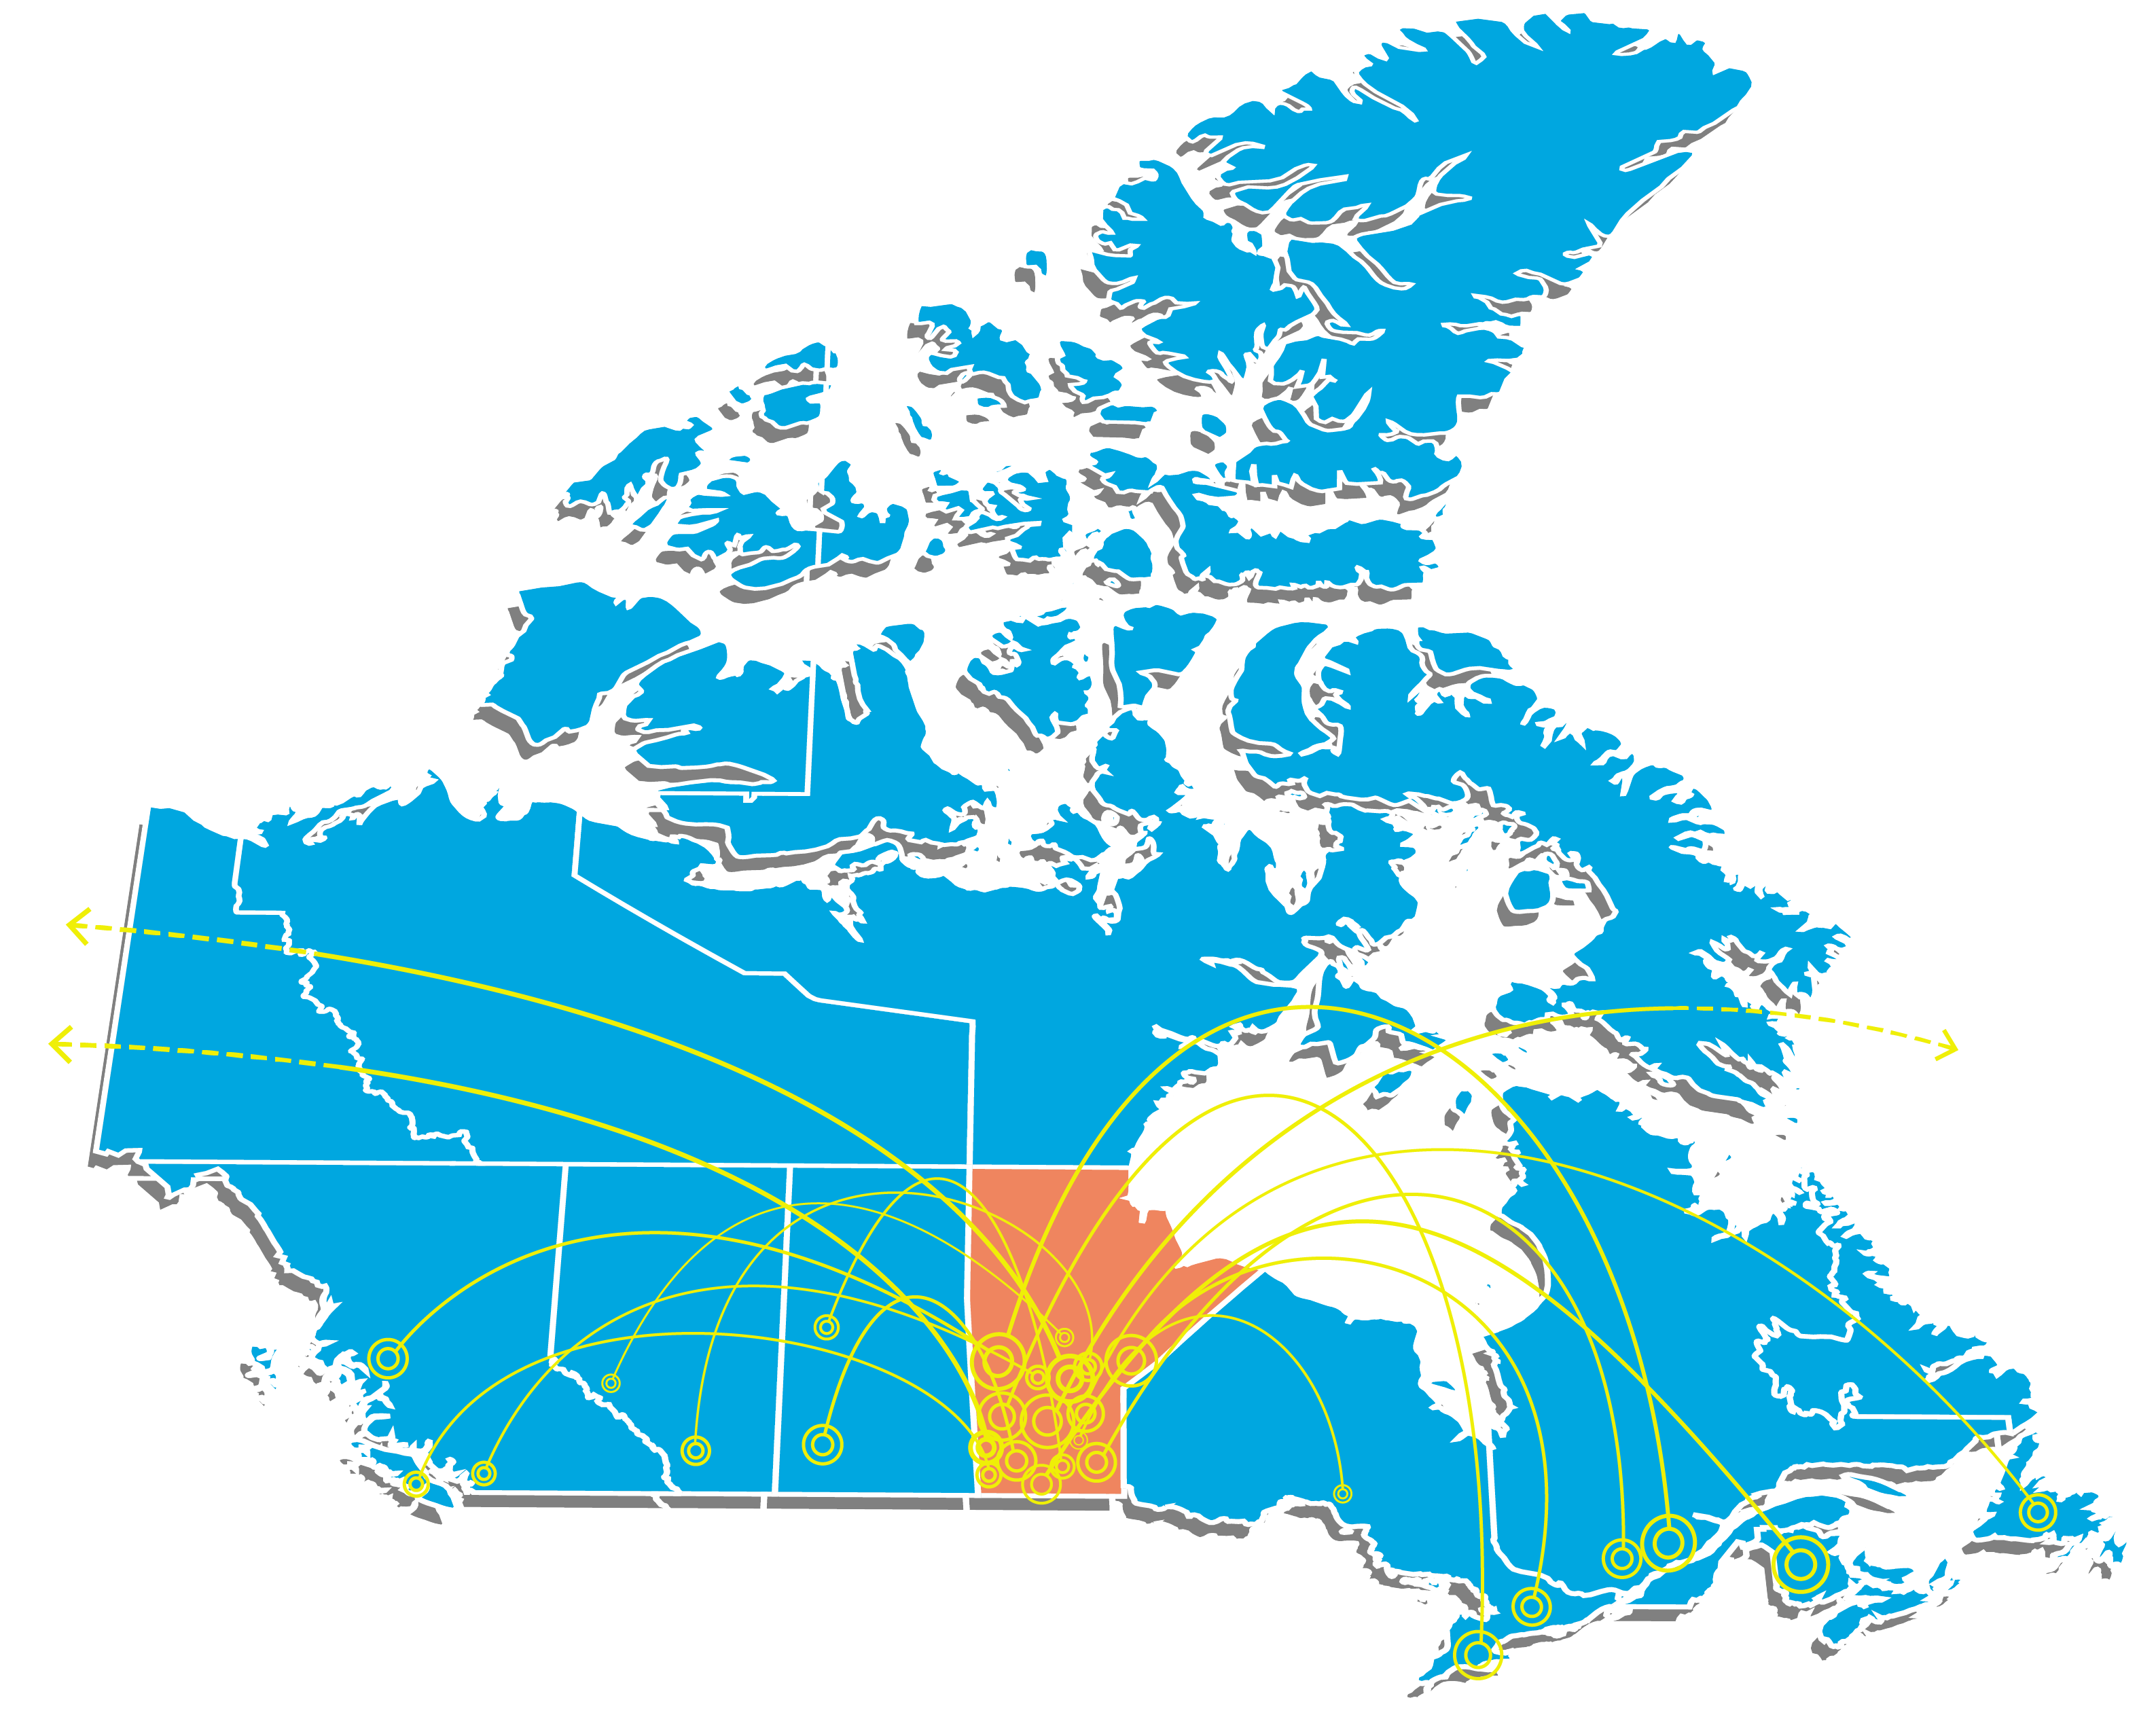 Manitoba Map Https://Www.flagshipcompany.com